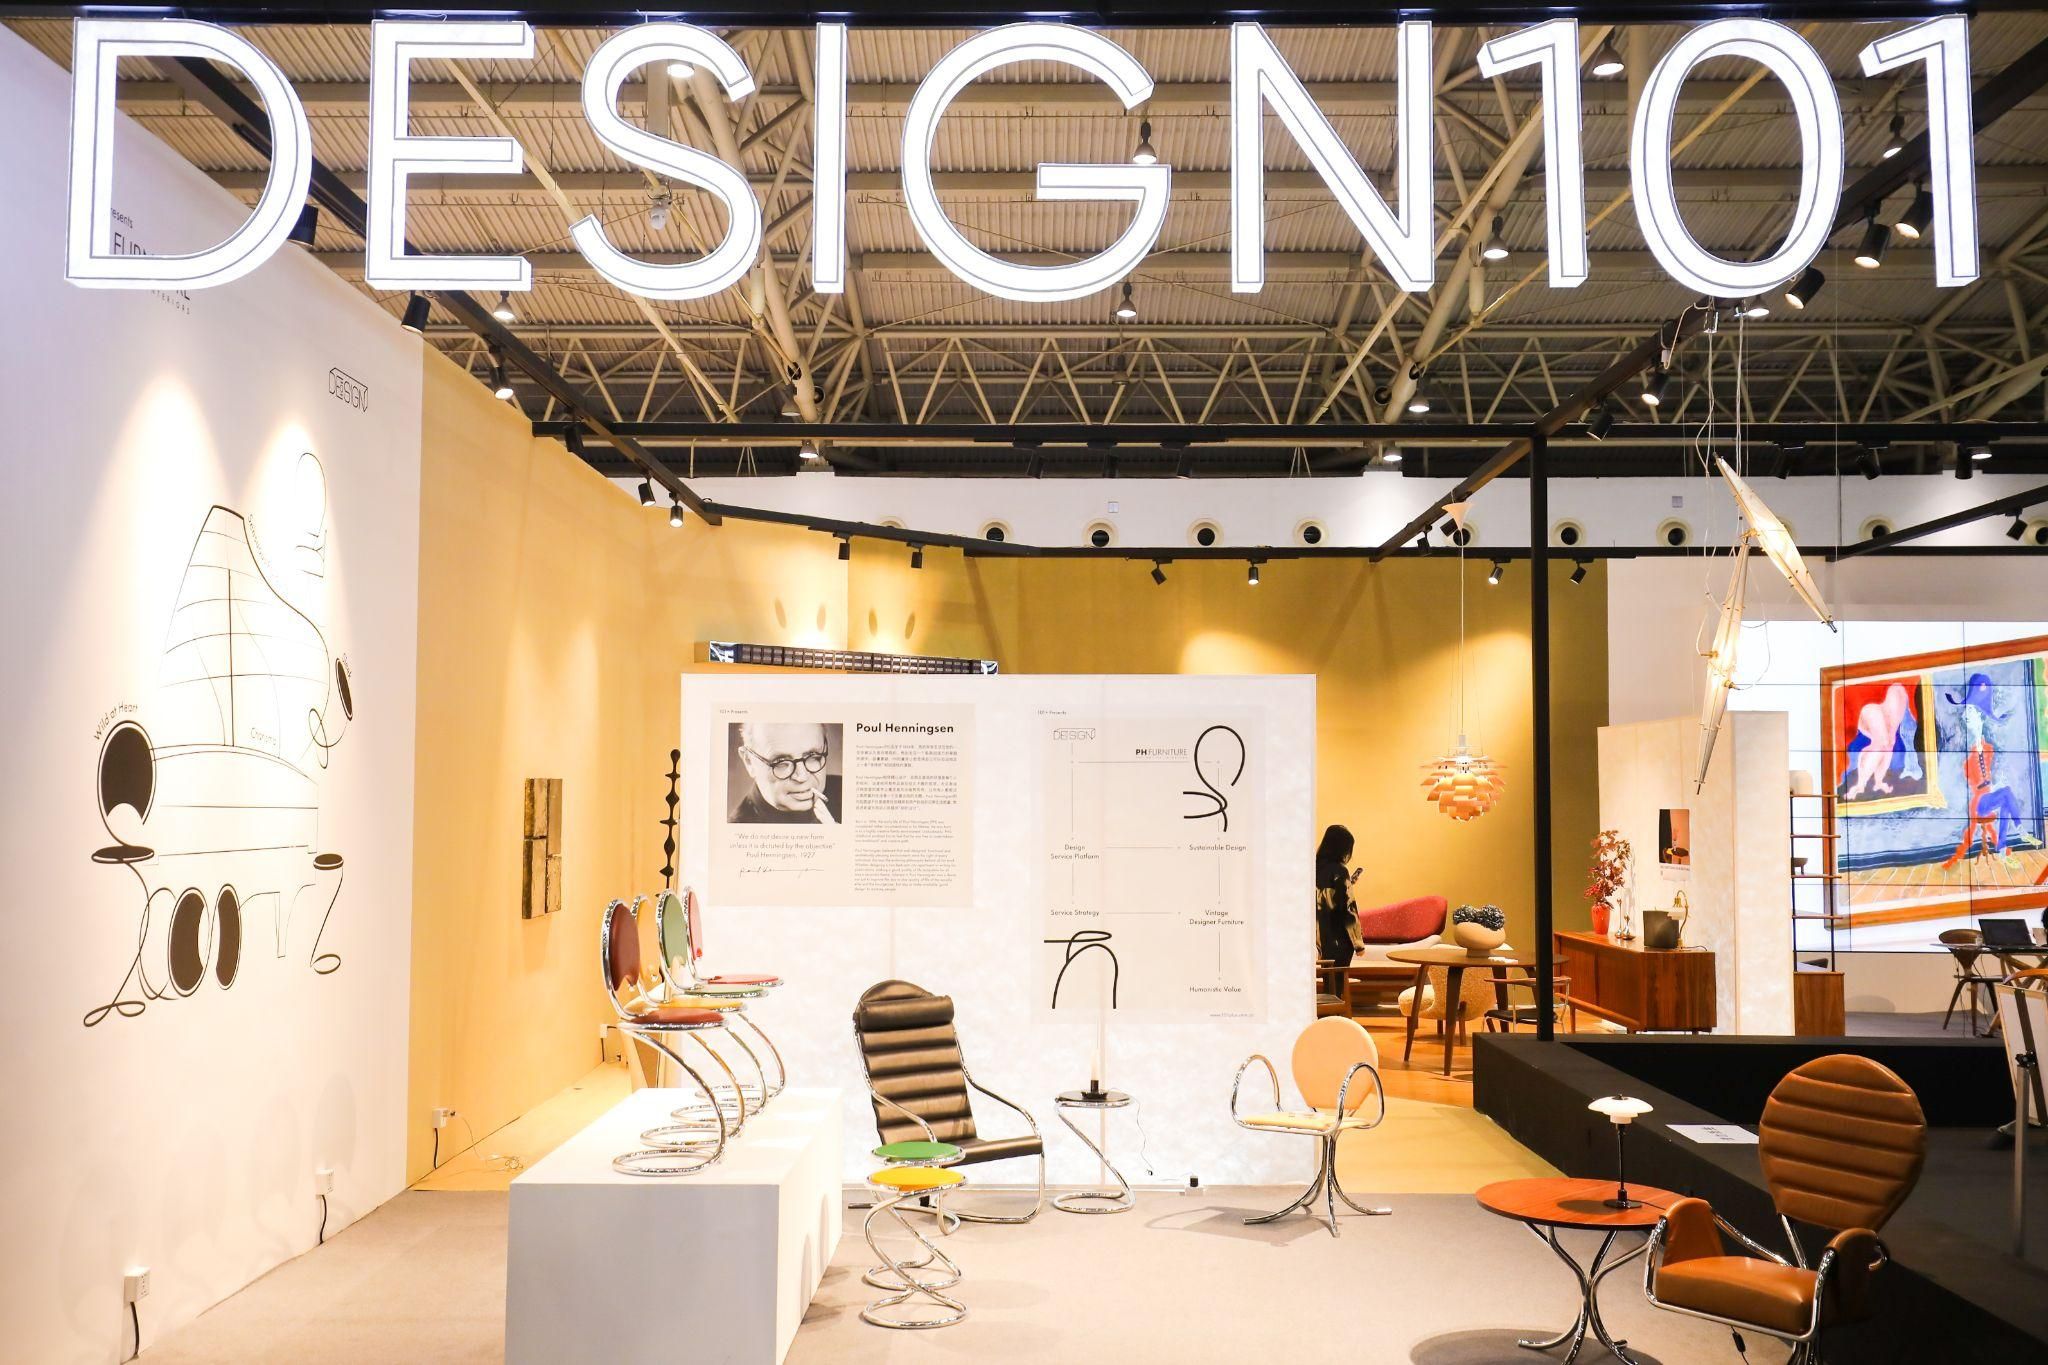 Design 101 debuted a showcase for Danish architect Poul Henningsen